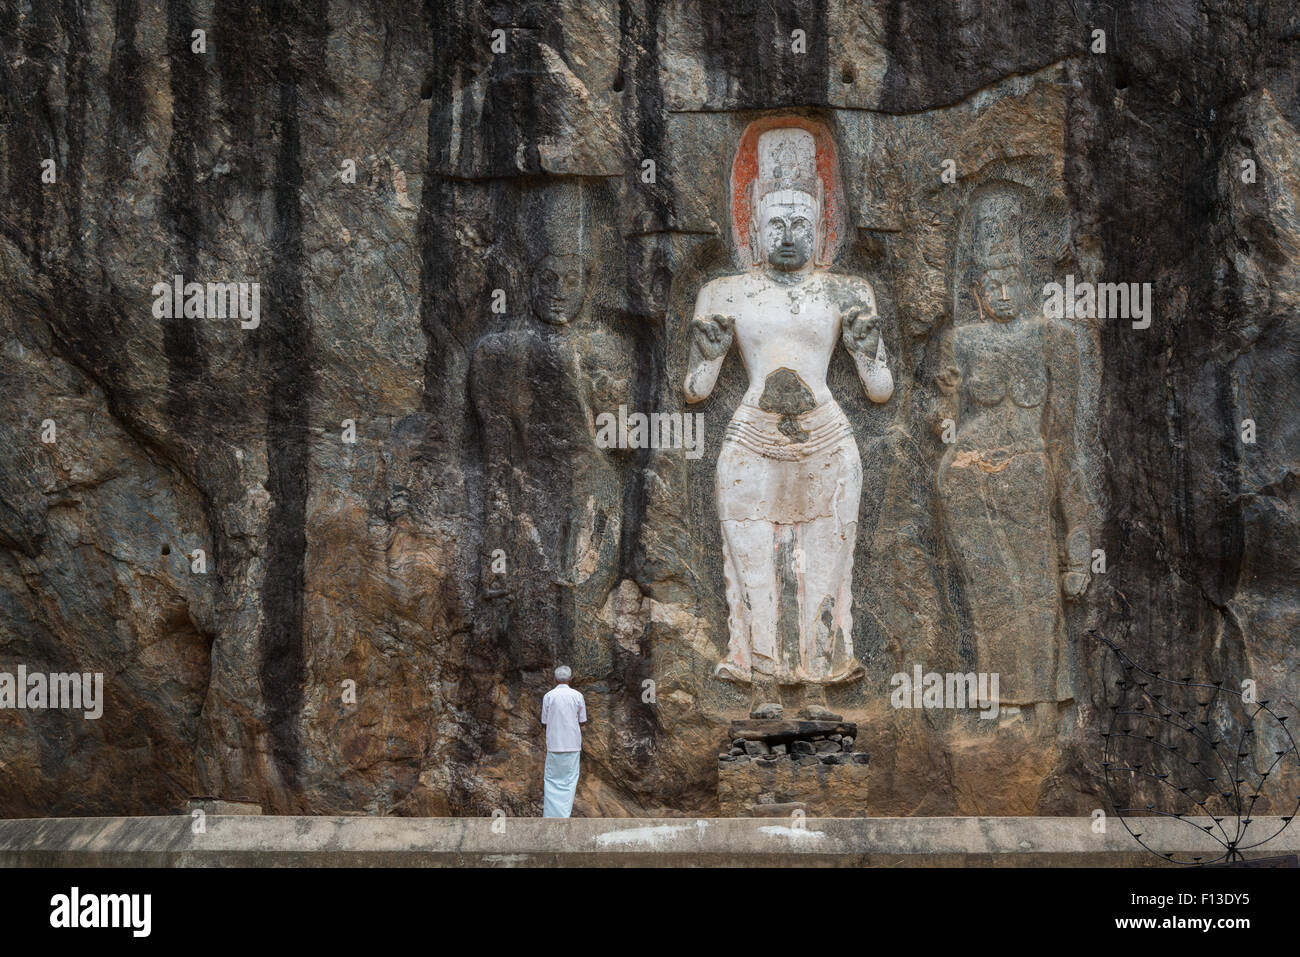 Man worshiping in front of rock sculpture, Sri Lanka Stock Photo